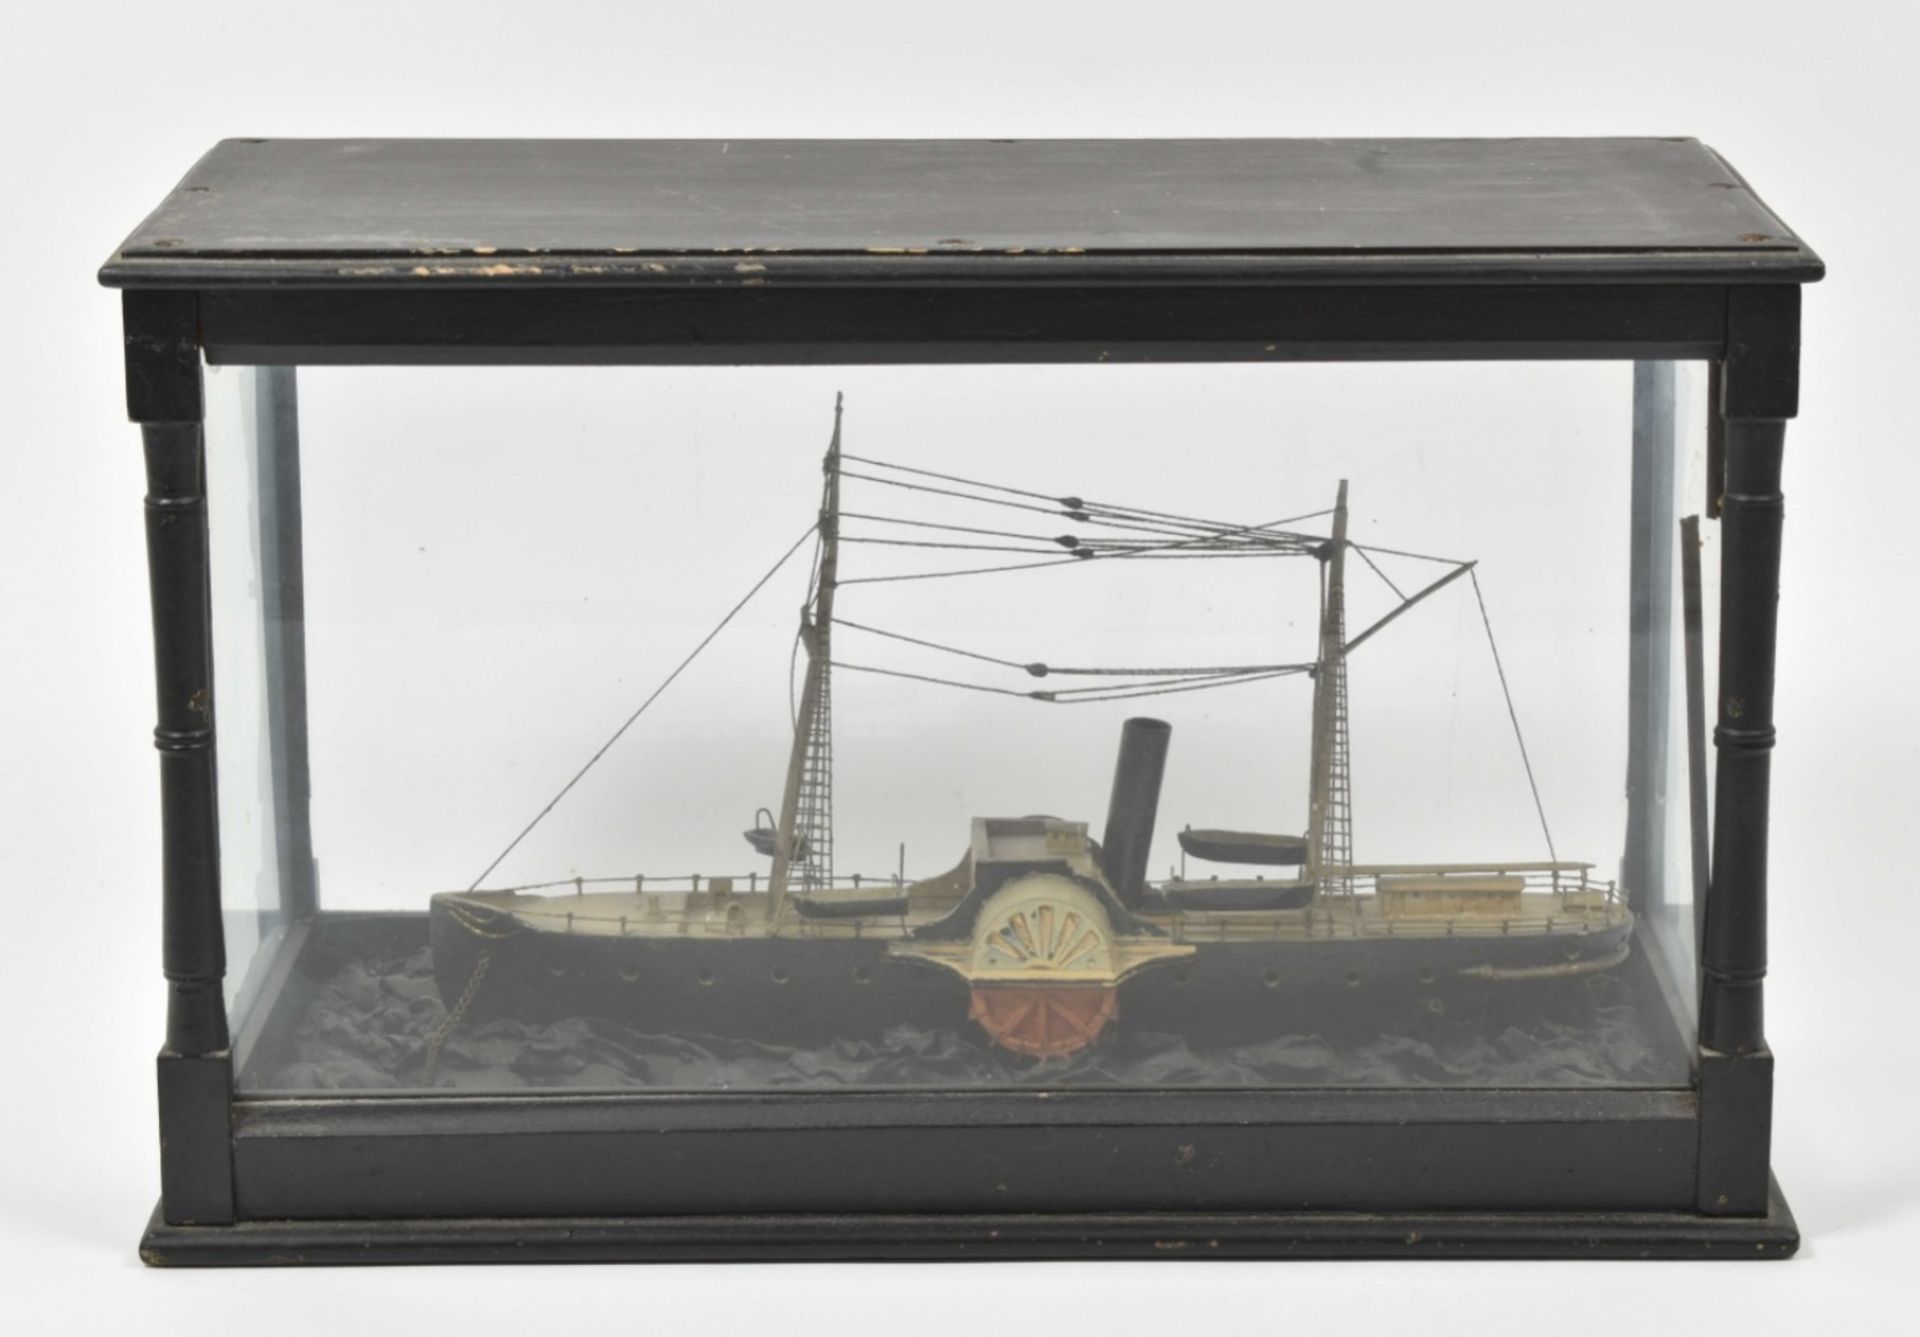 Historic model of paddle steamer "Jane"